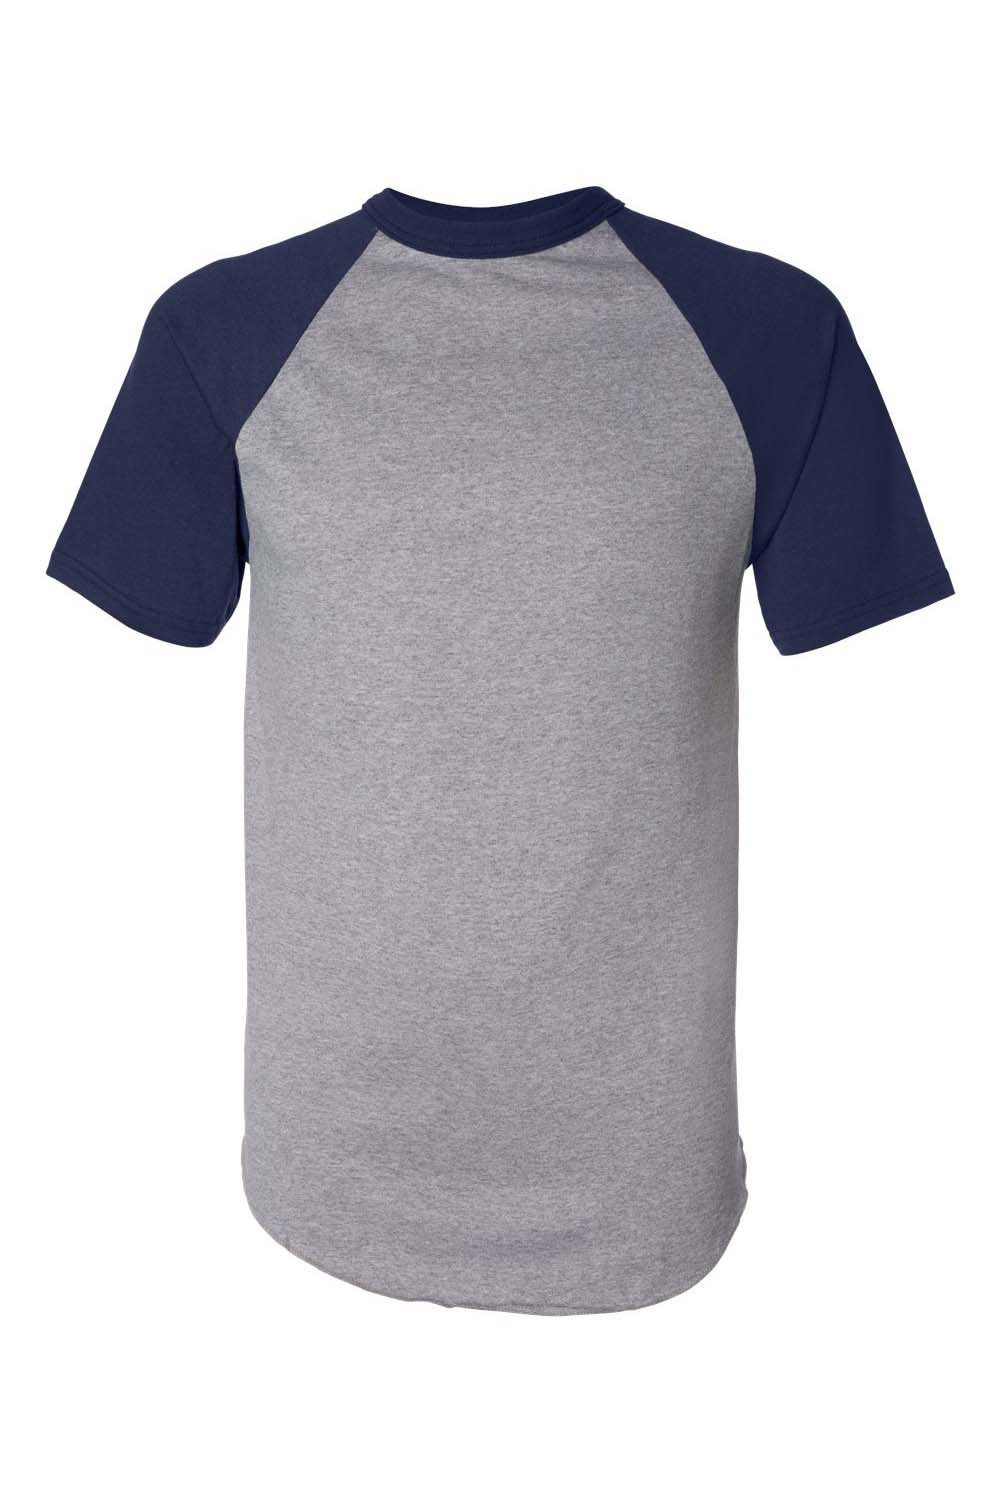 Augusta Sportswear 423 Mens Short Sleeve Crewneck T-Shirt Heather Grey/Navy Blue Model Flat Front